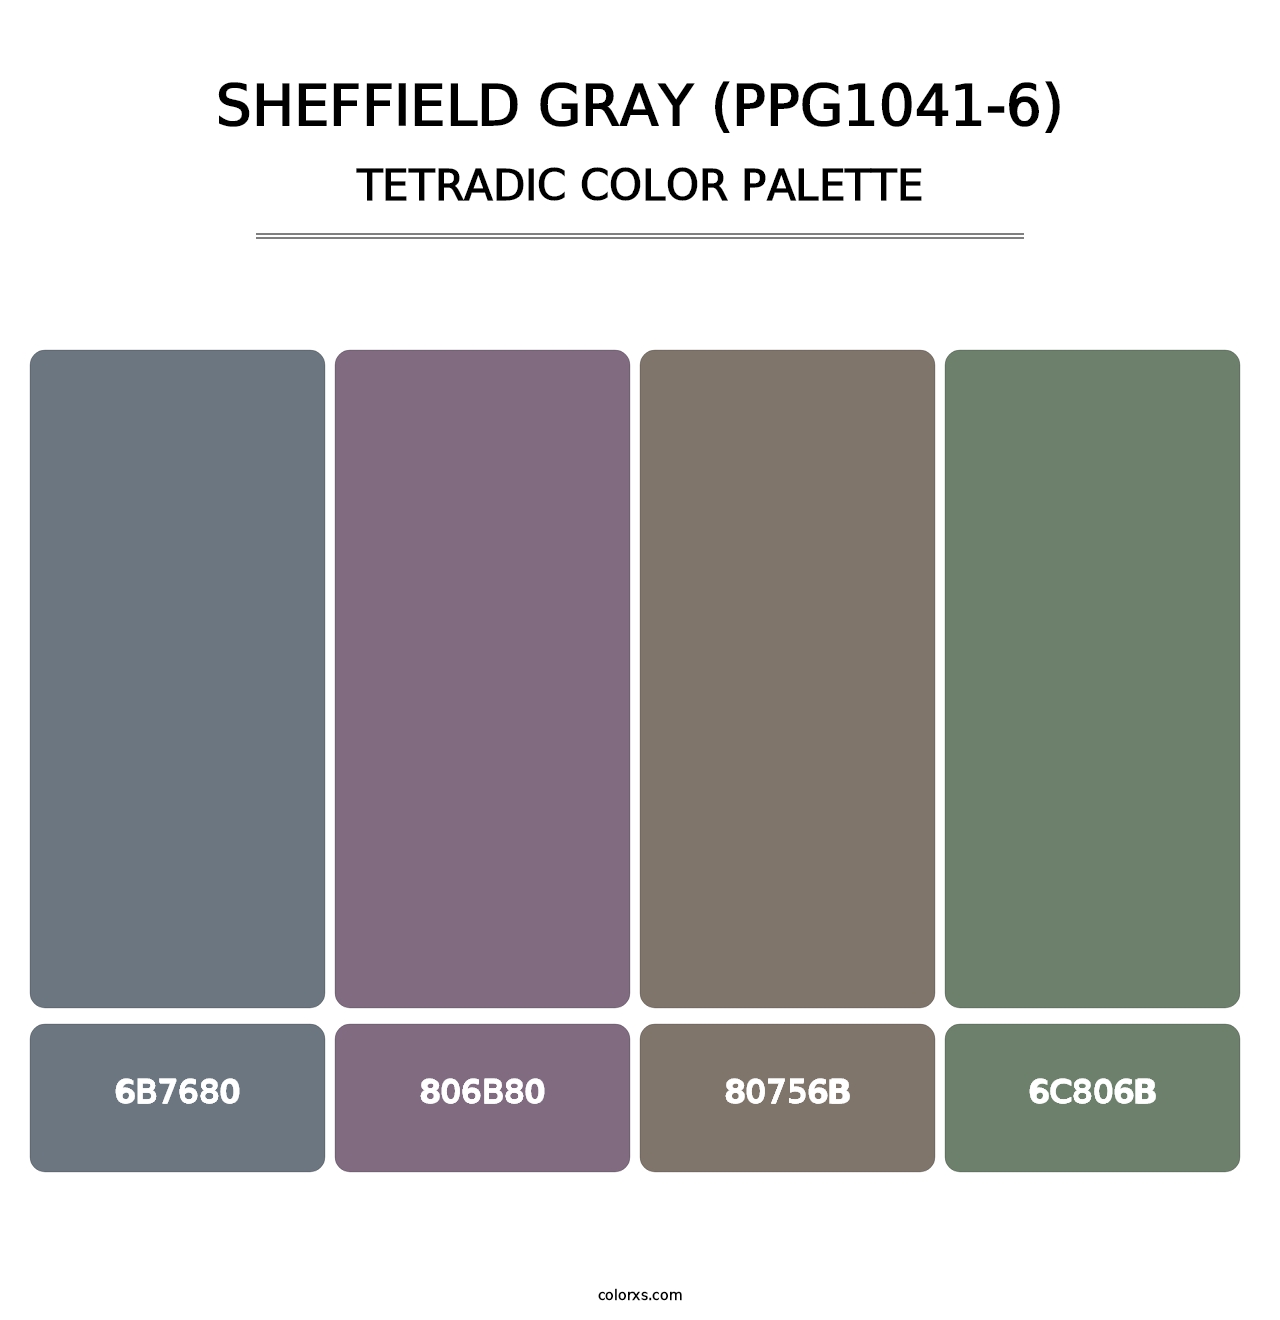 Sheffield Gray (PPG1041-6) - Tetradic Color Palette